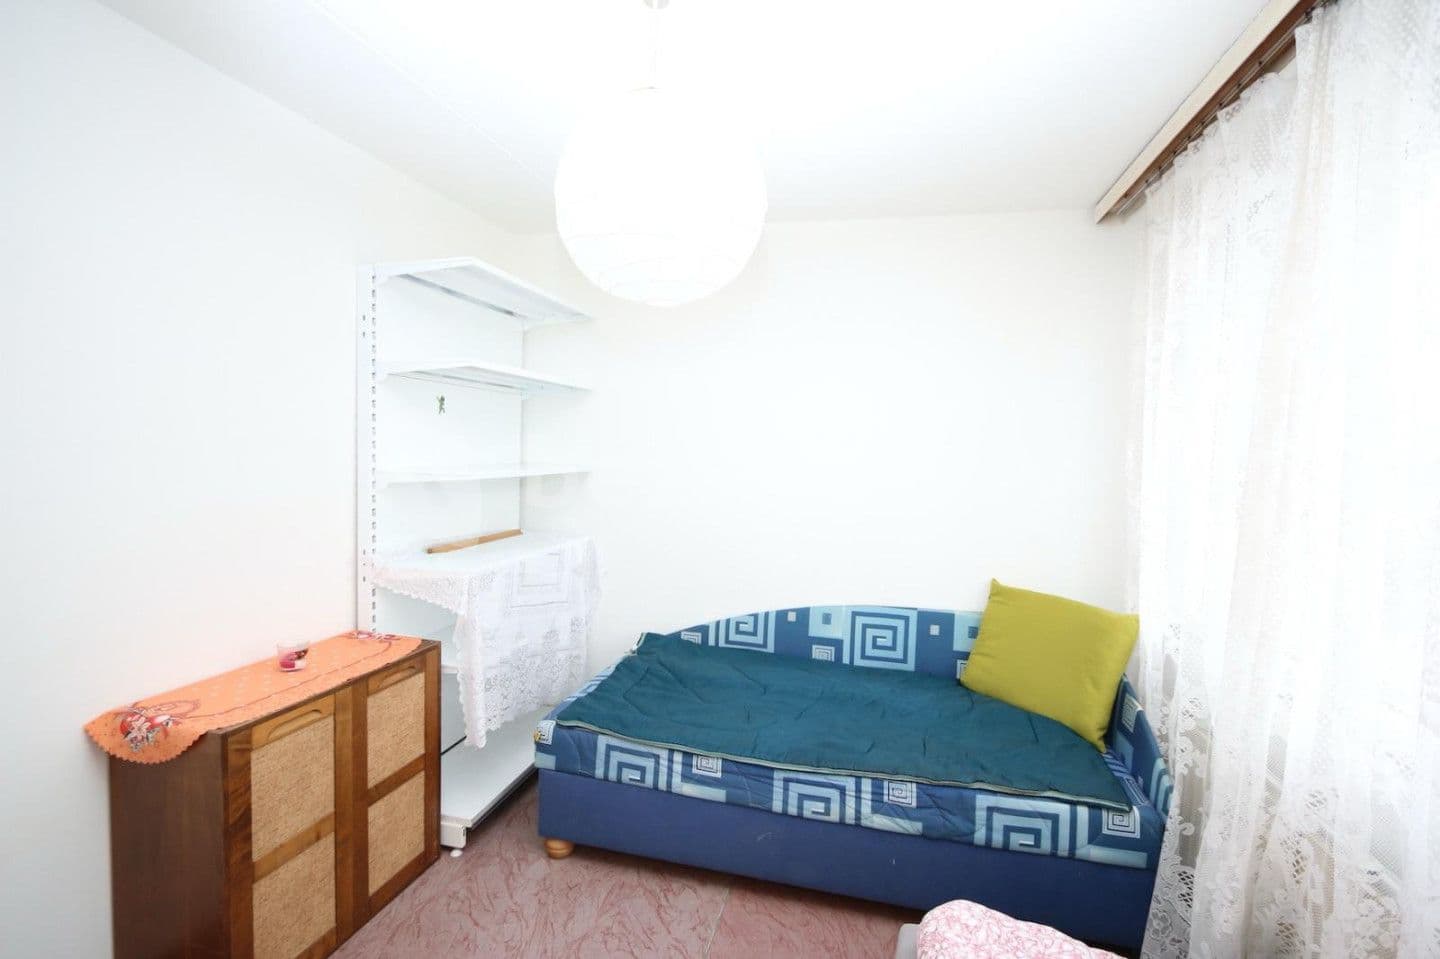 3 bedroom flat for sale, 56 m², Růžová, Most, Ústecký Region